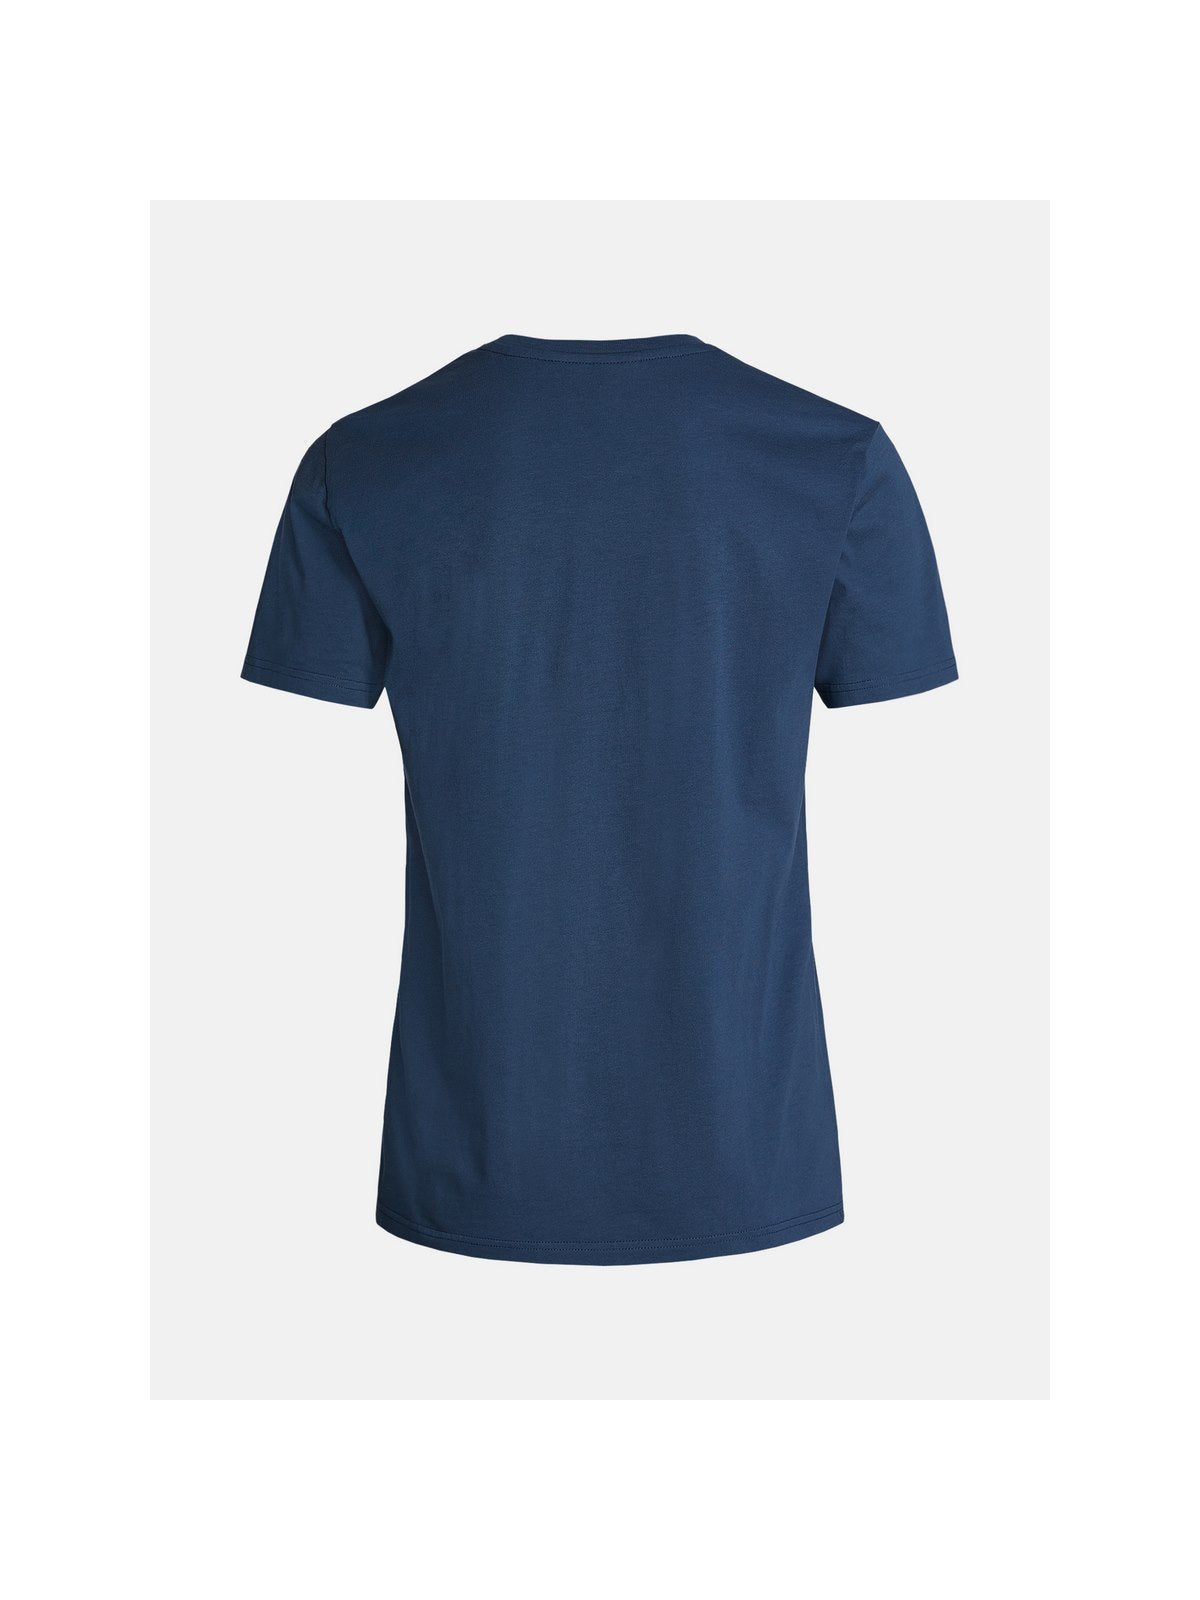 T Shirt Peak Performance M Original Tee - niebieski